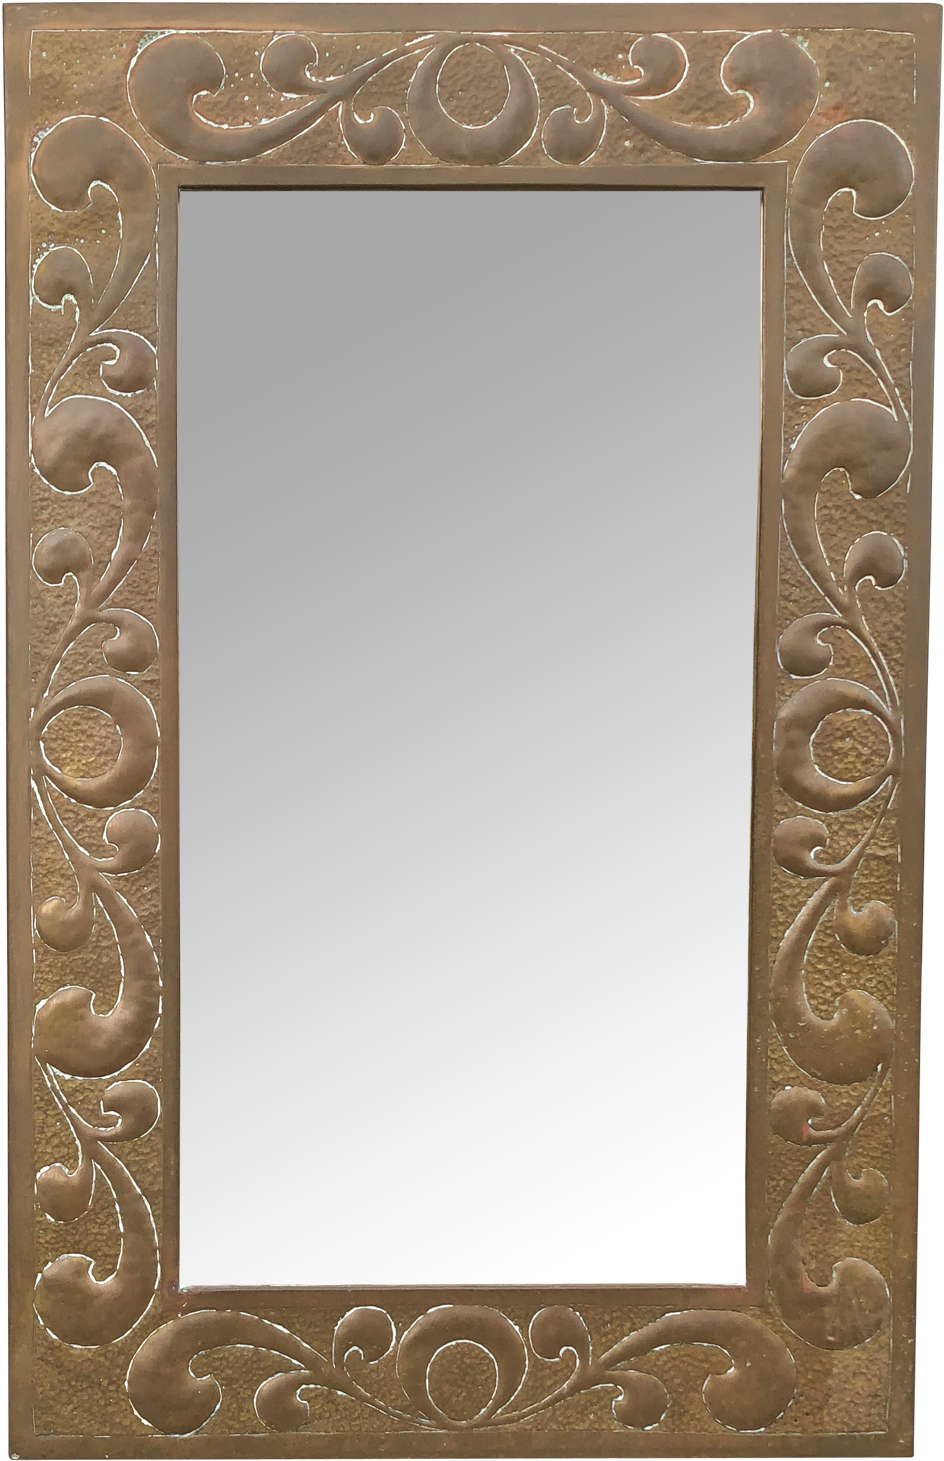 Ornate Antique Wooden Mirror Frame PNG image